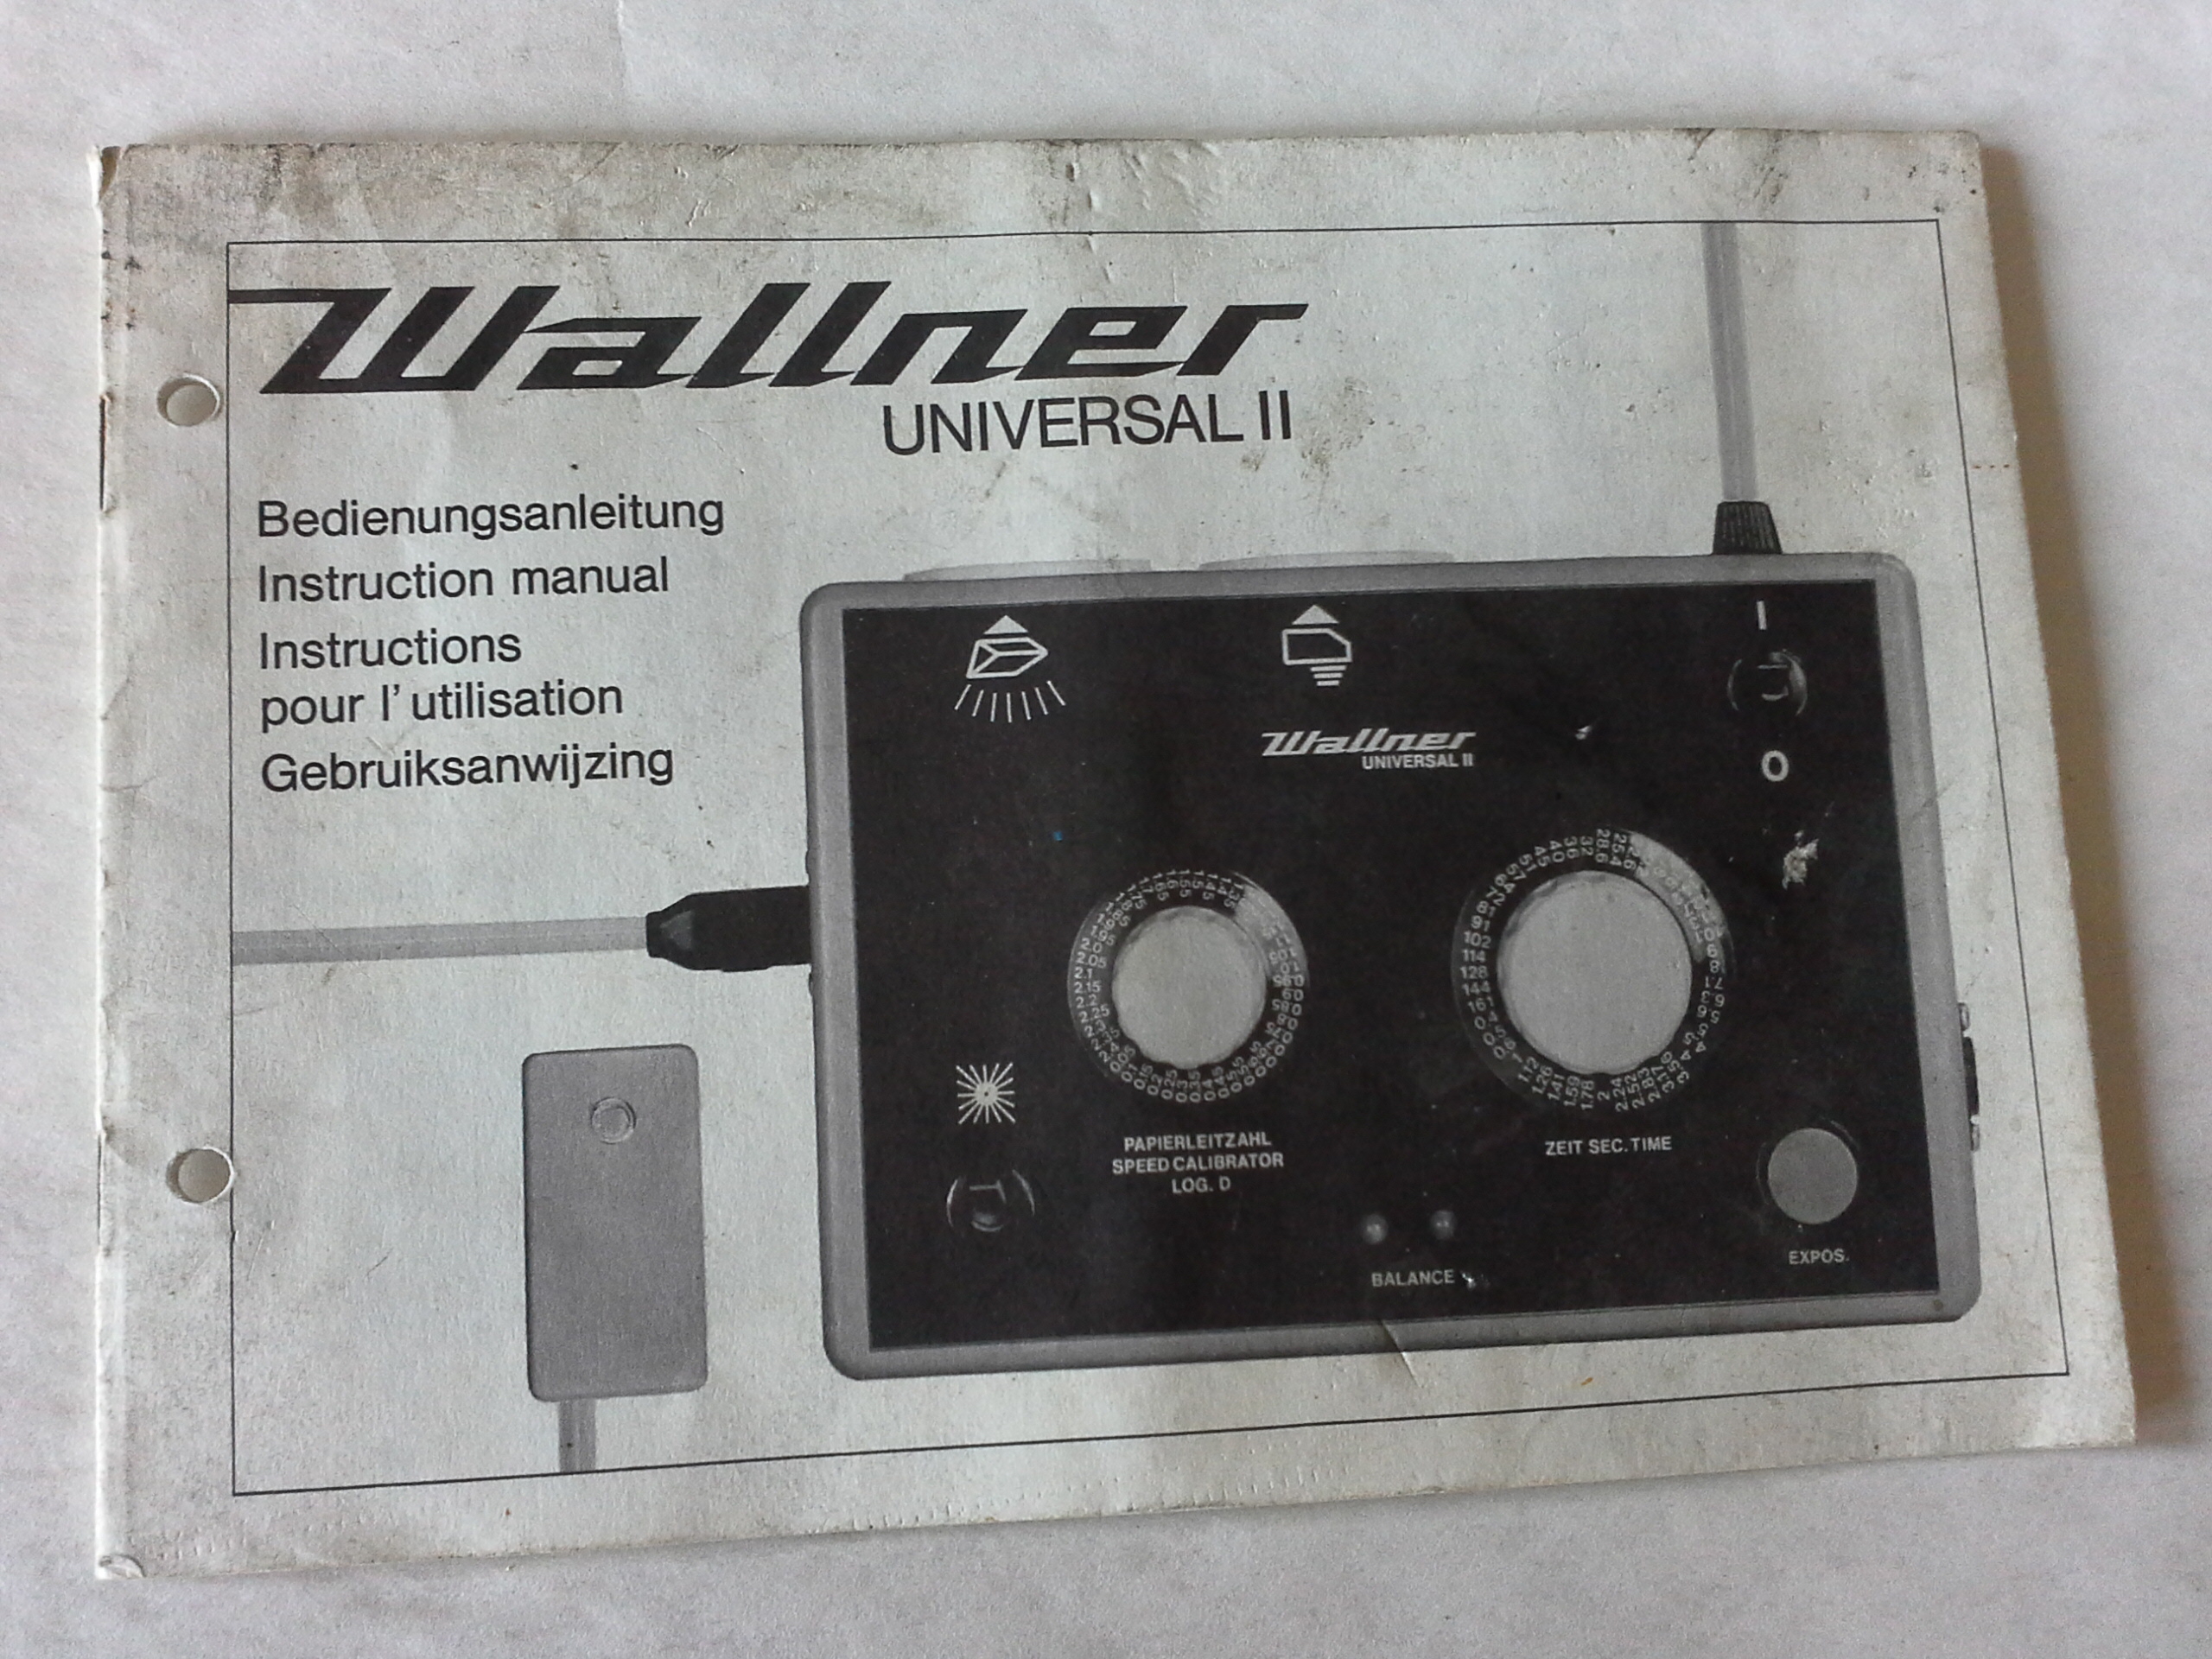 Wallner Universal II